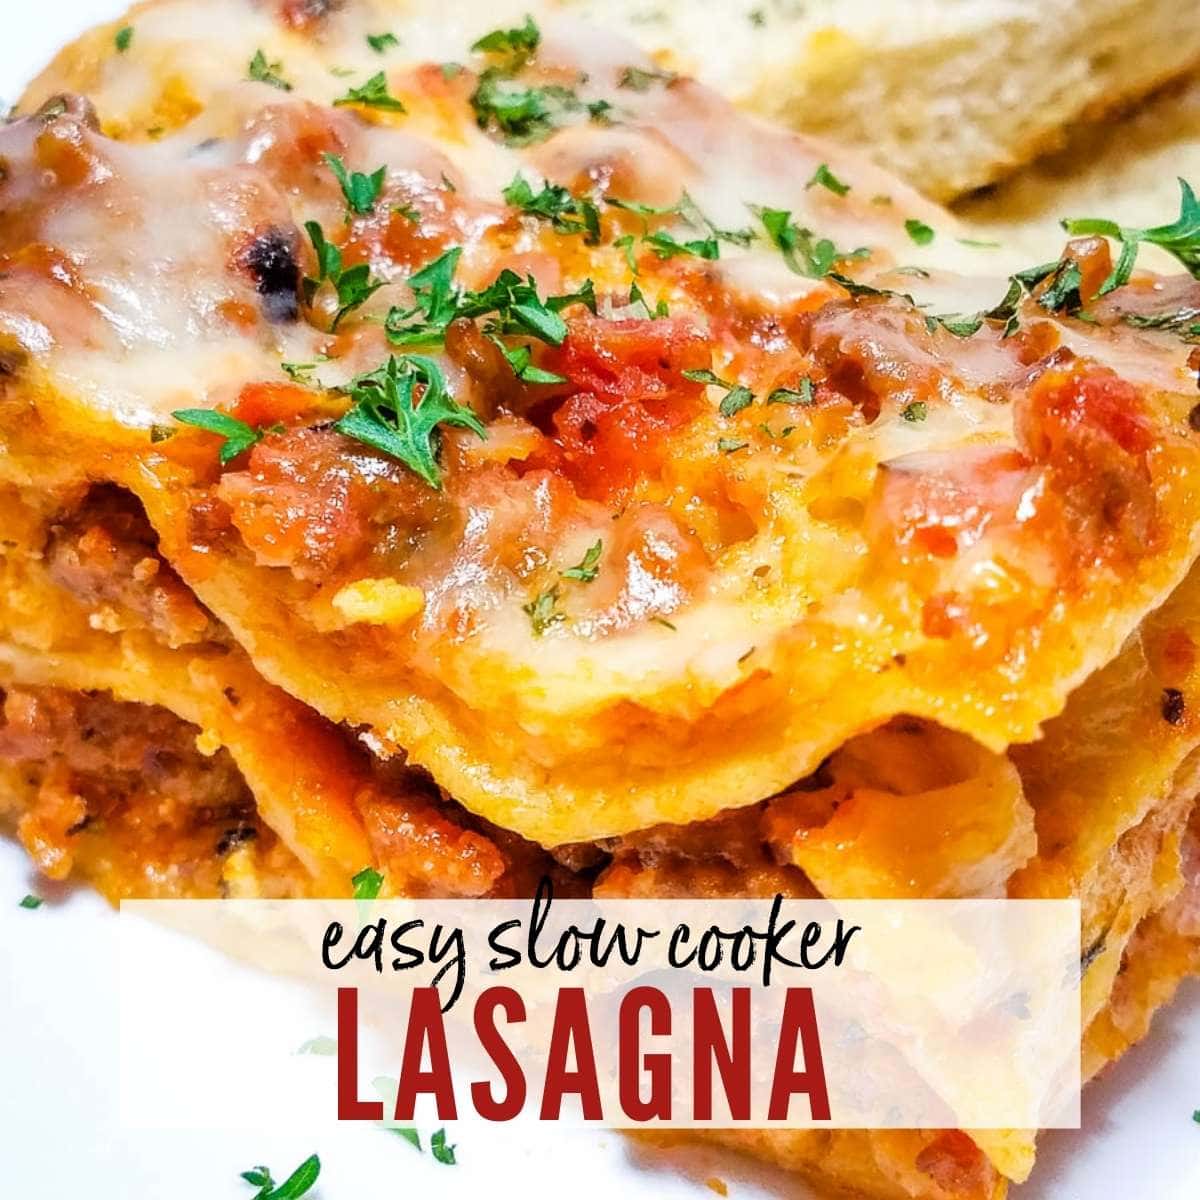 Slow Cooker Lasagna